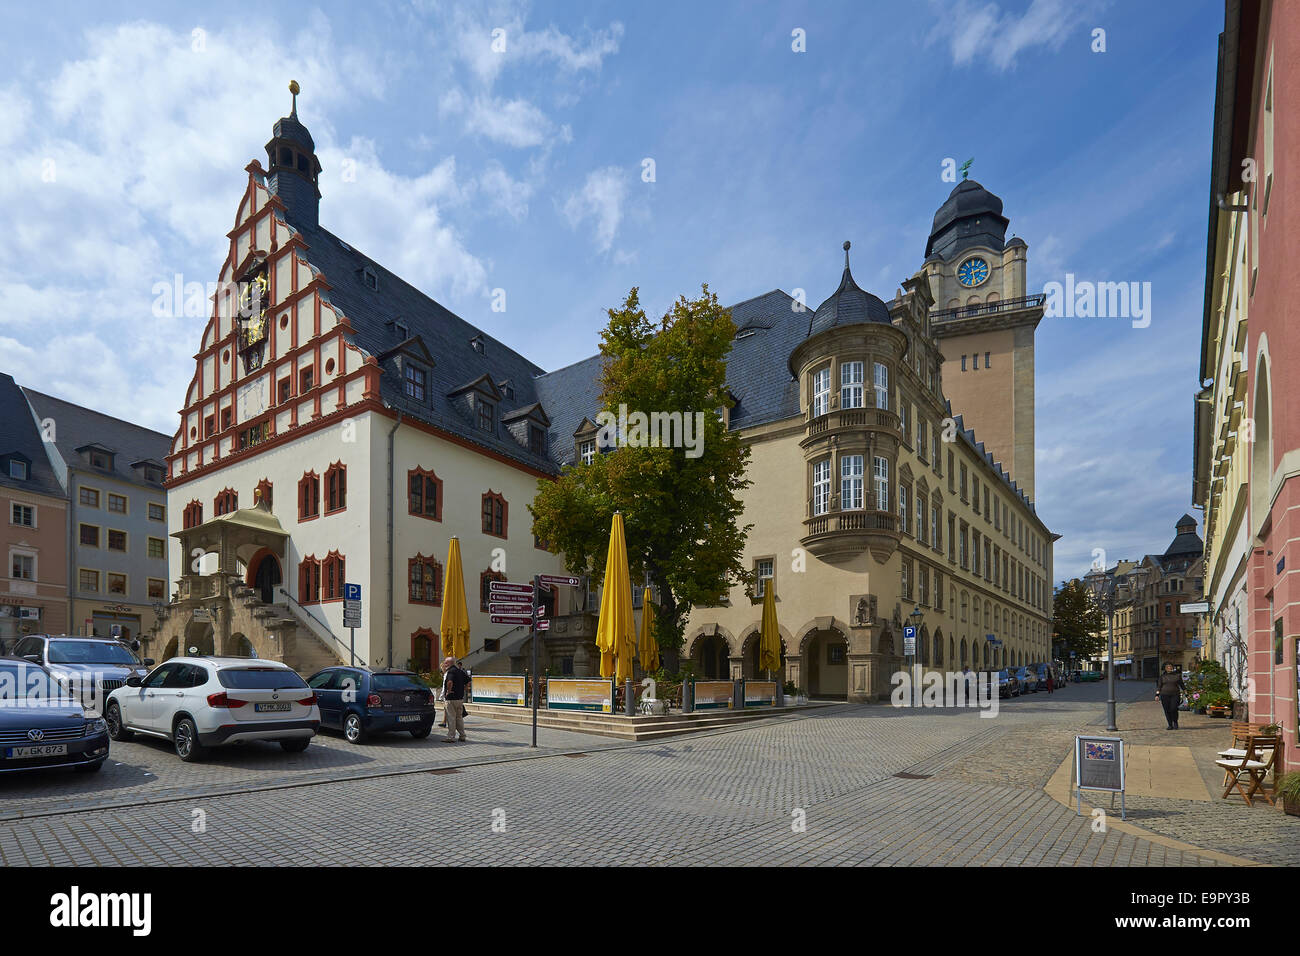 City Hall in Plauen, Germany Stock Photo - Alamy